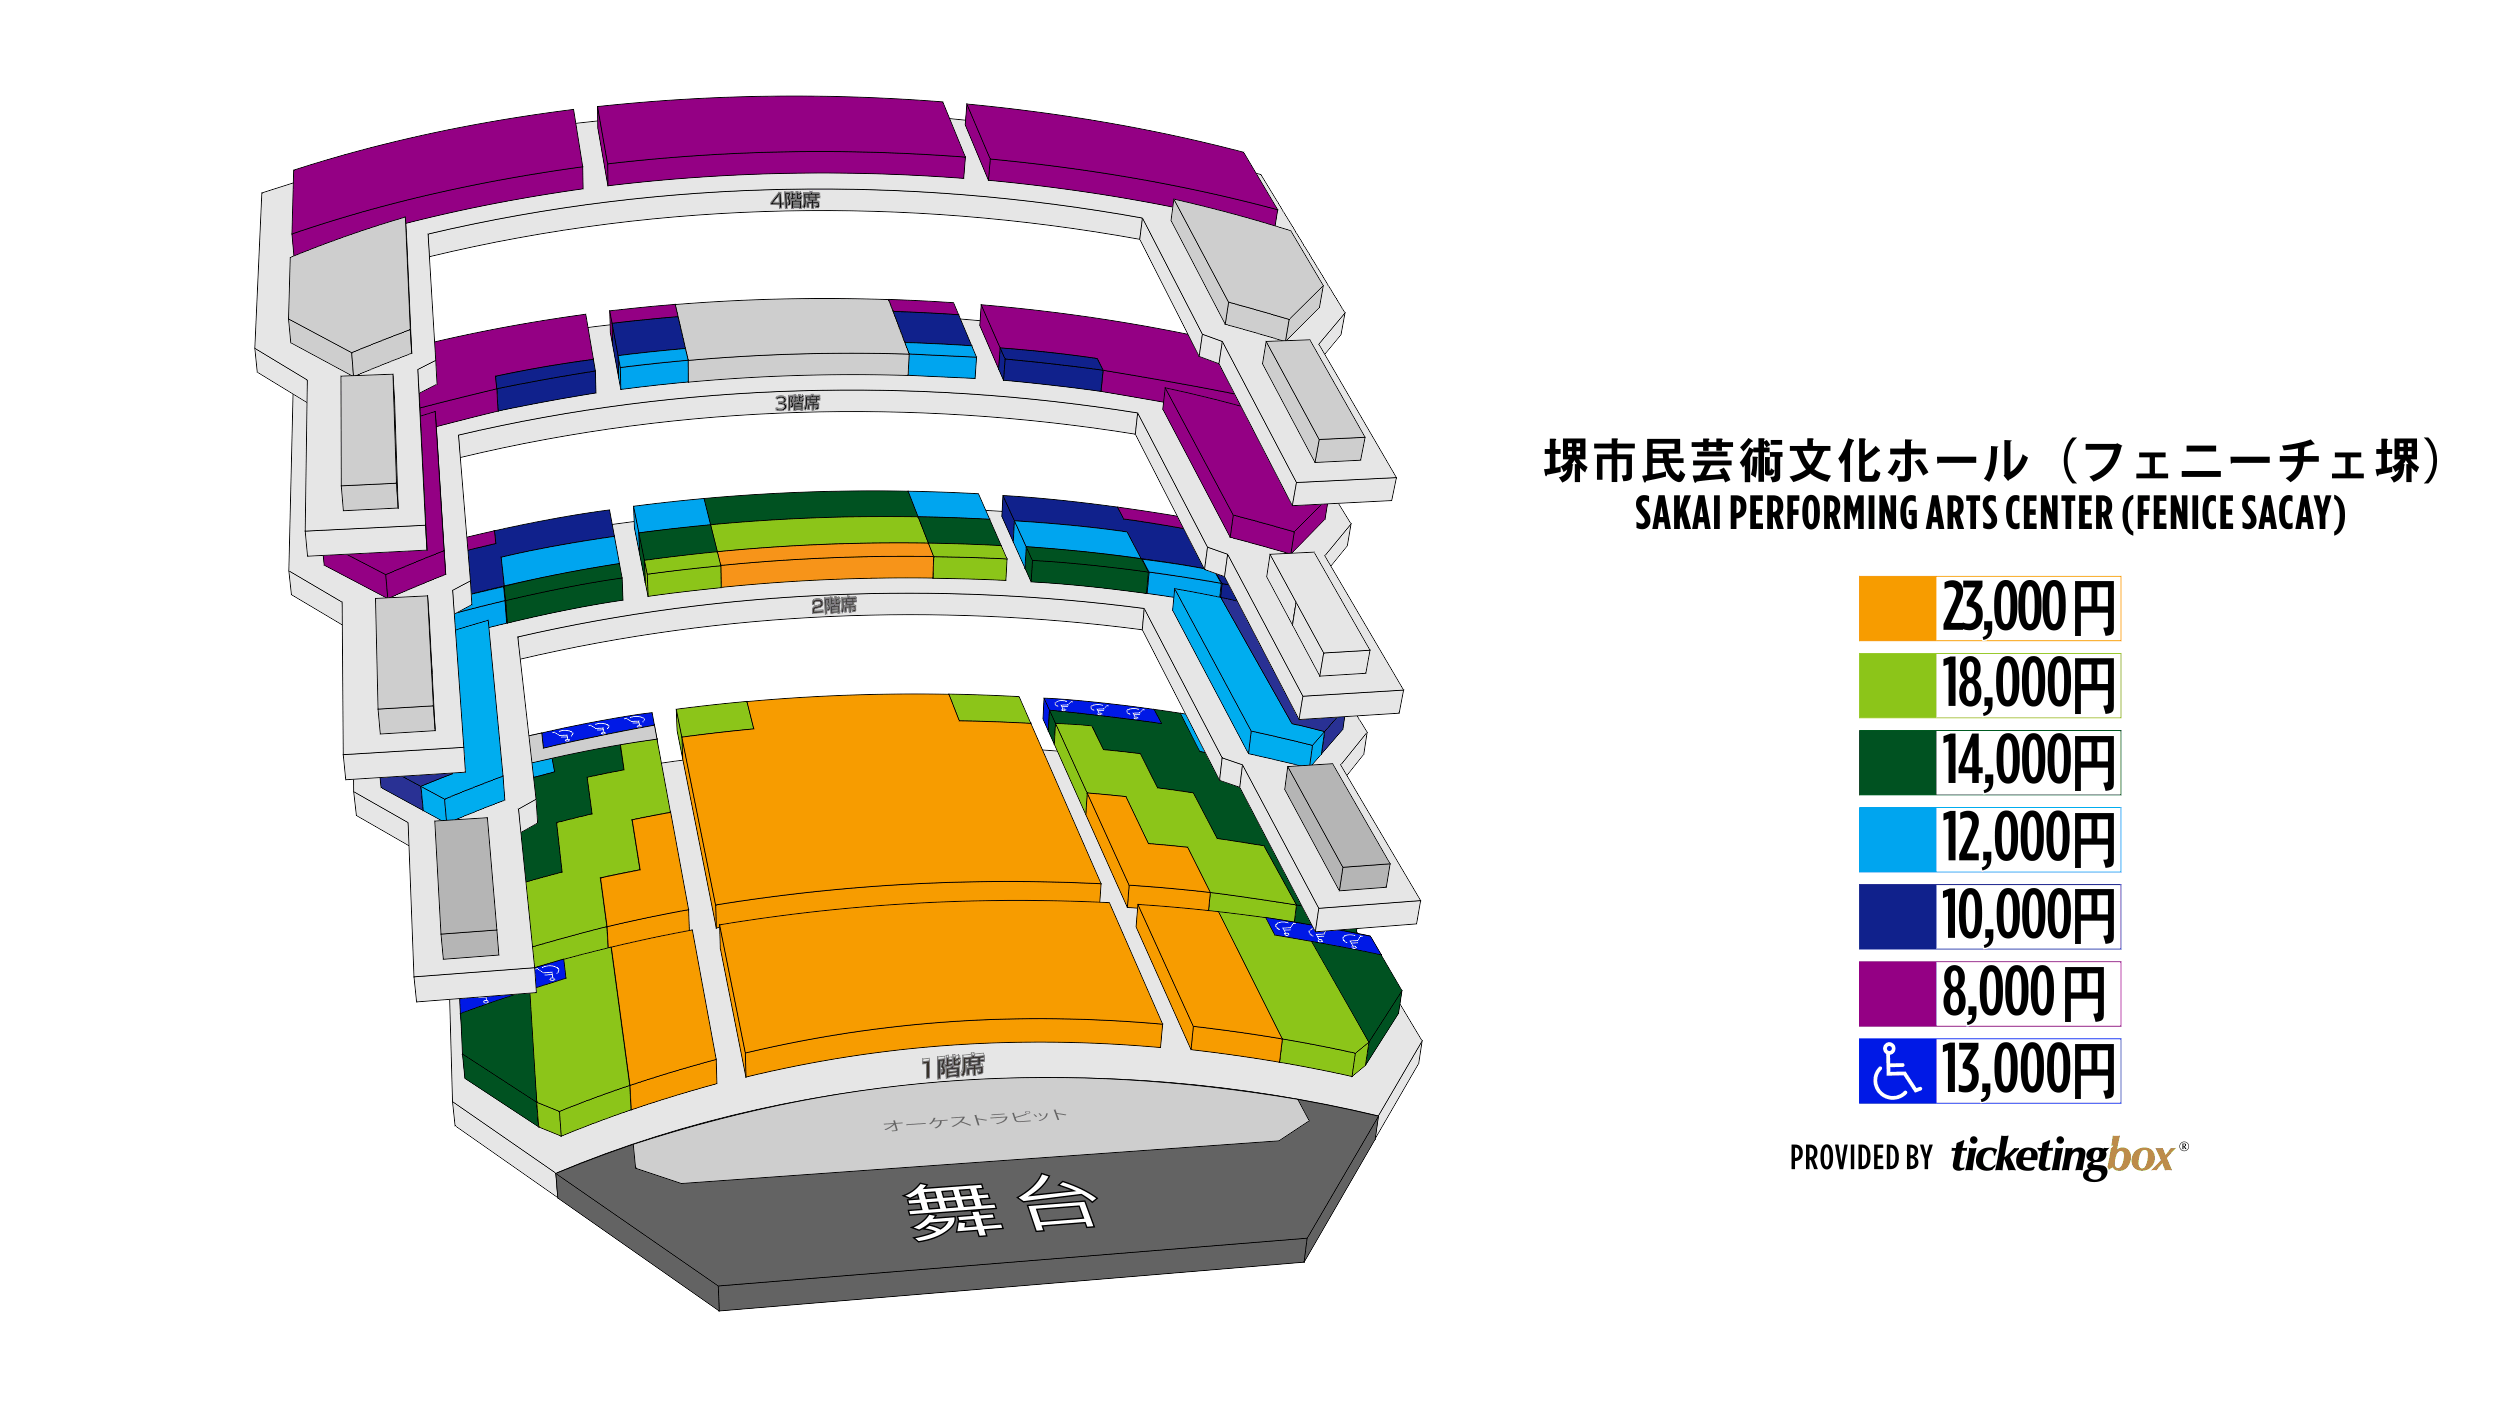 seating chart image